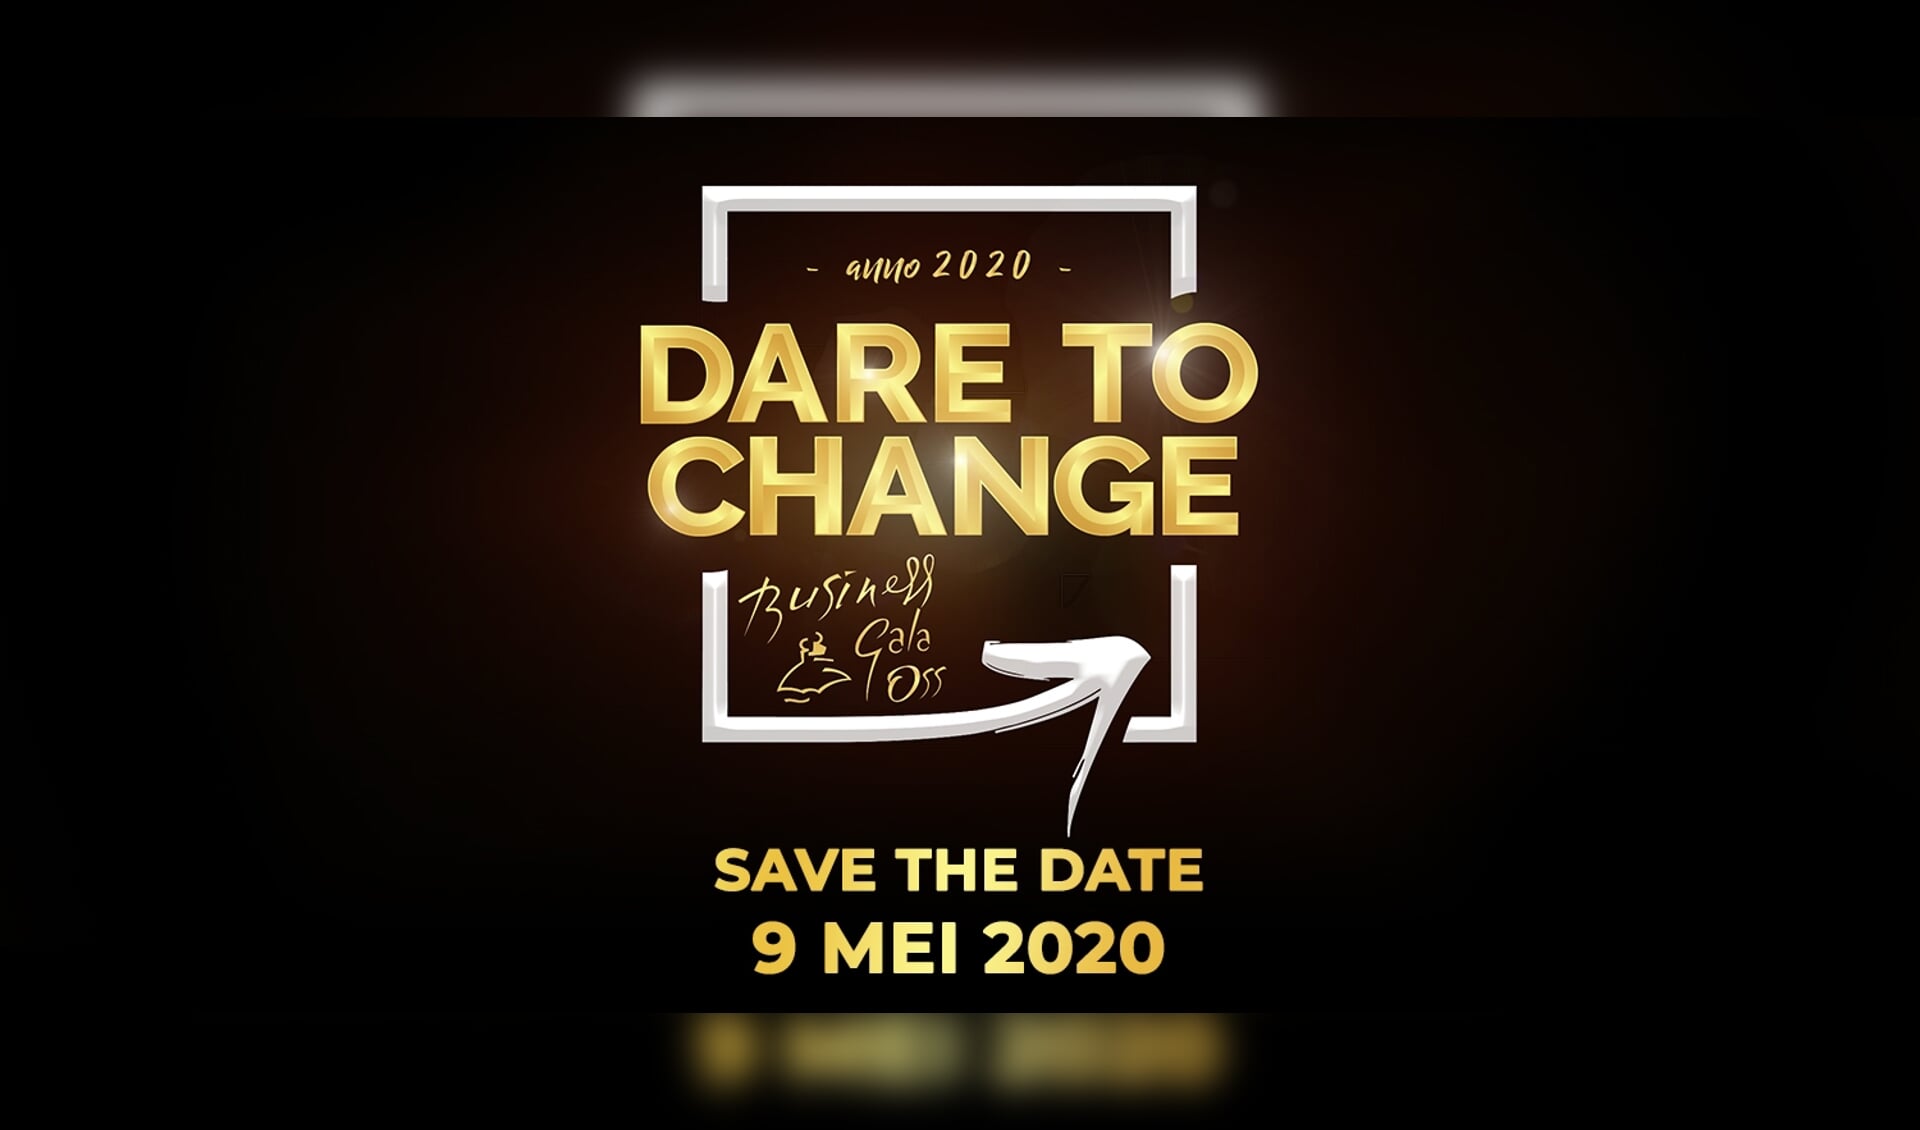 'Dare to change' nieuw thema van Business Gala Oss 2020 